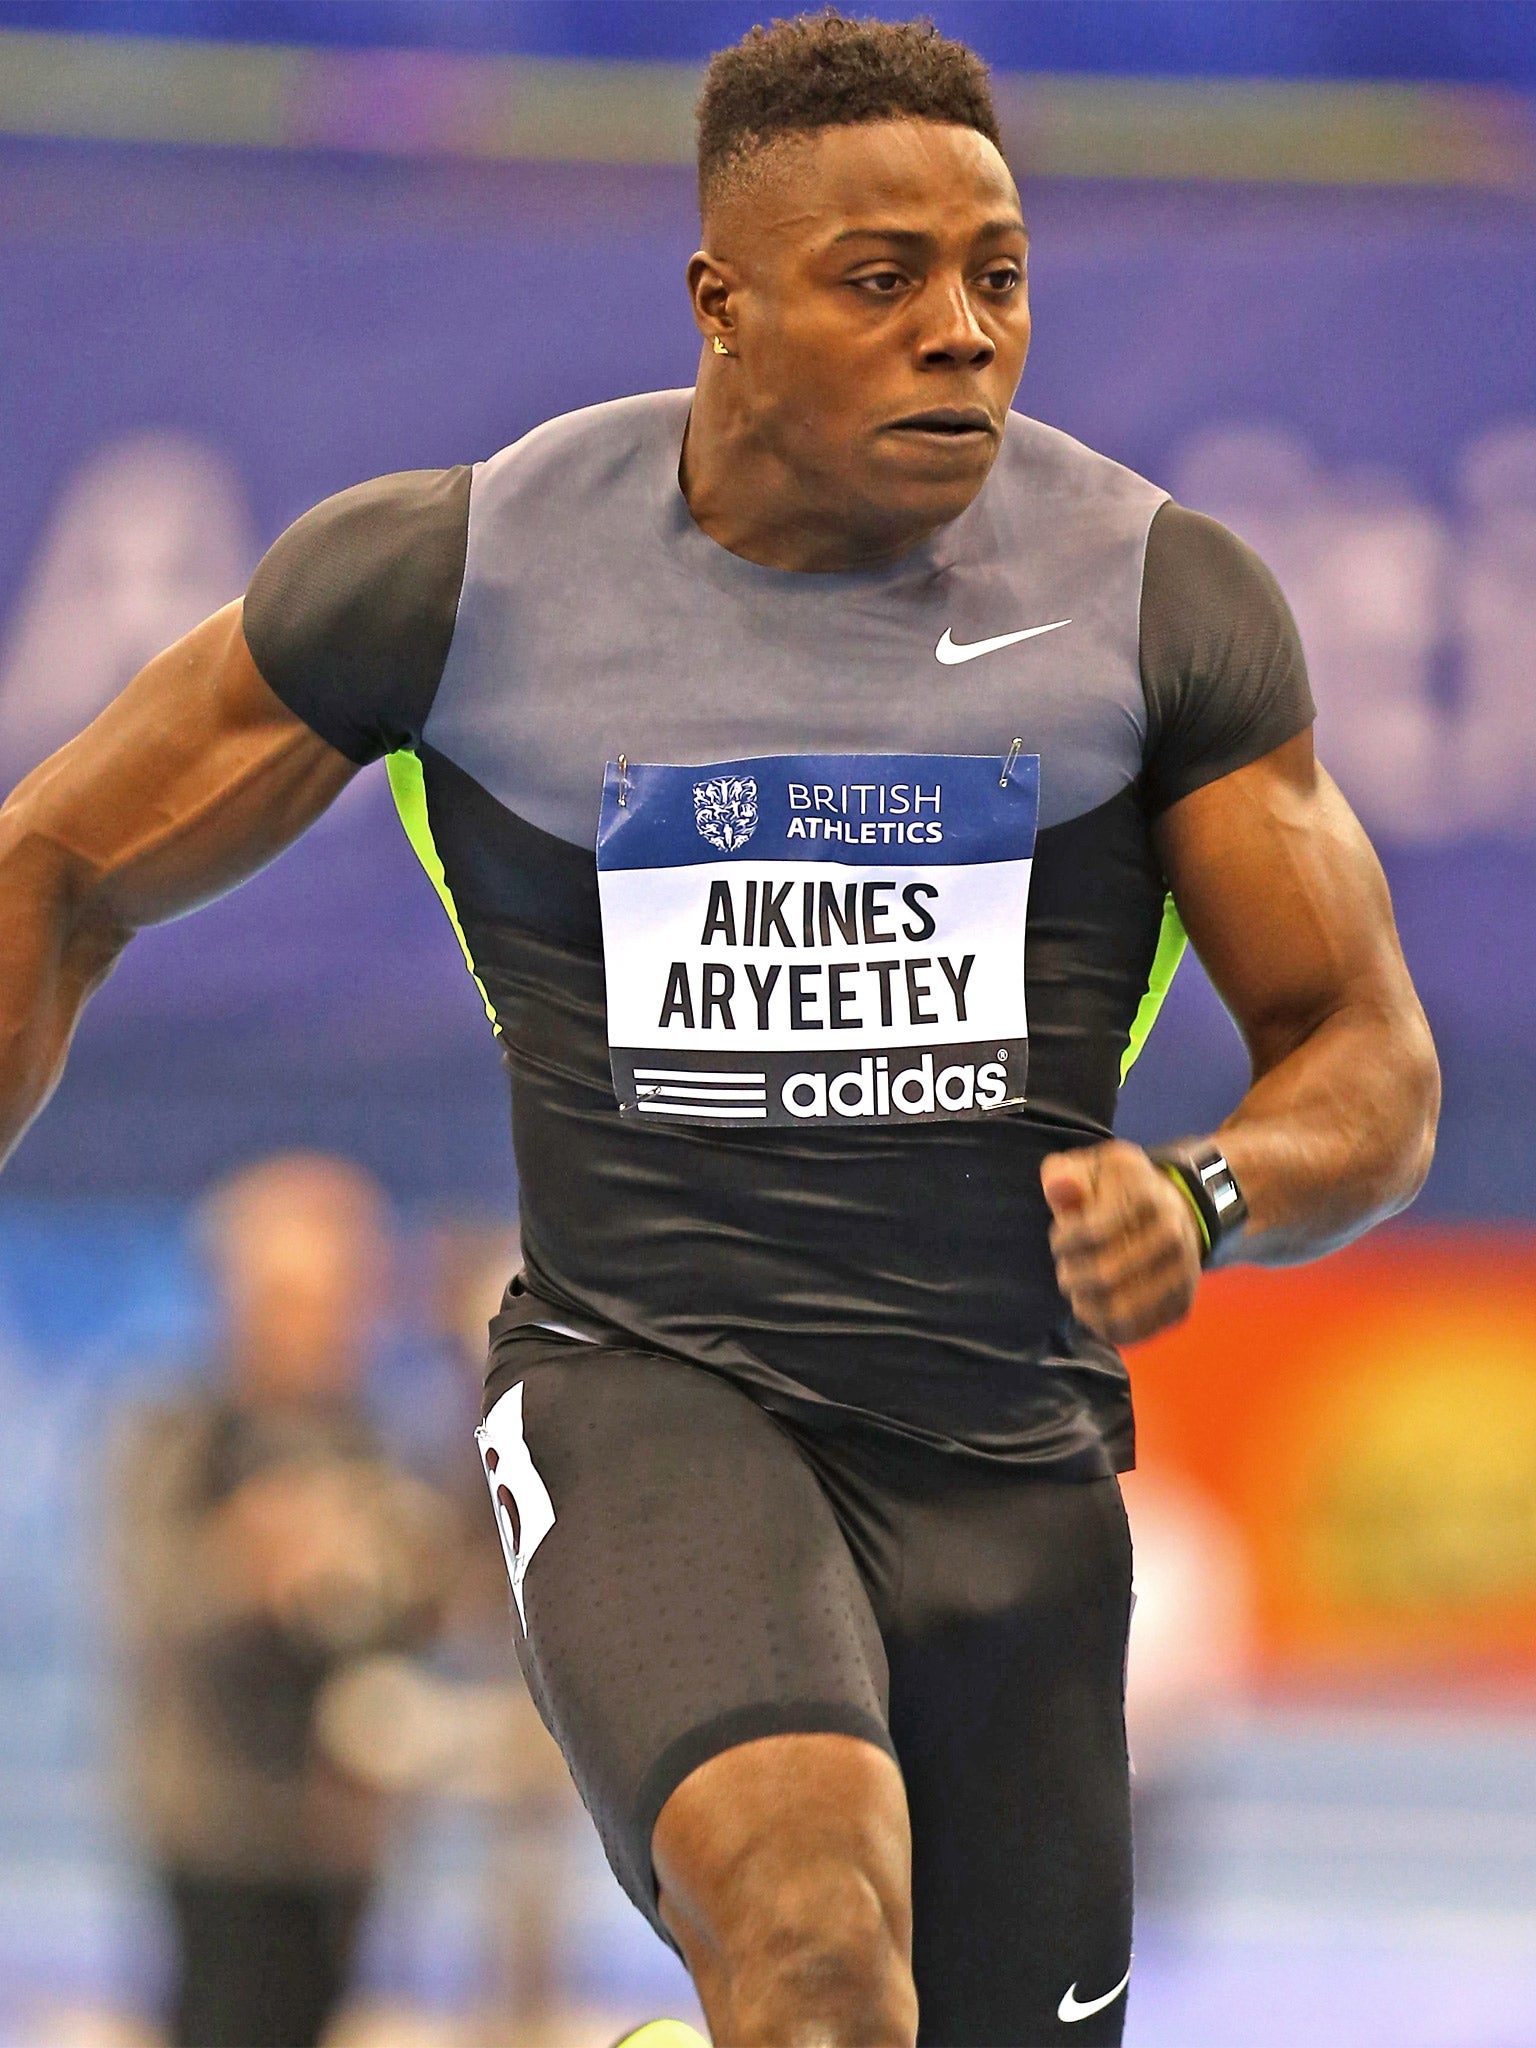 Harry Aikines-Aryeetey beat Yohan Blake to 100m gold at 2006 World Juniors